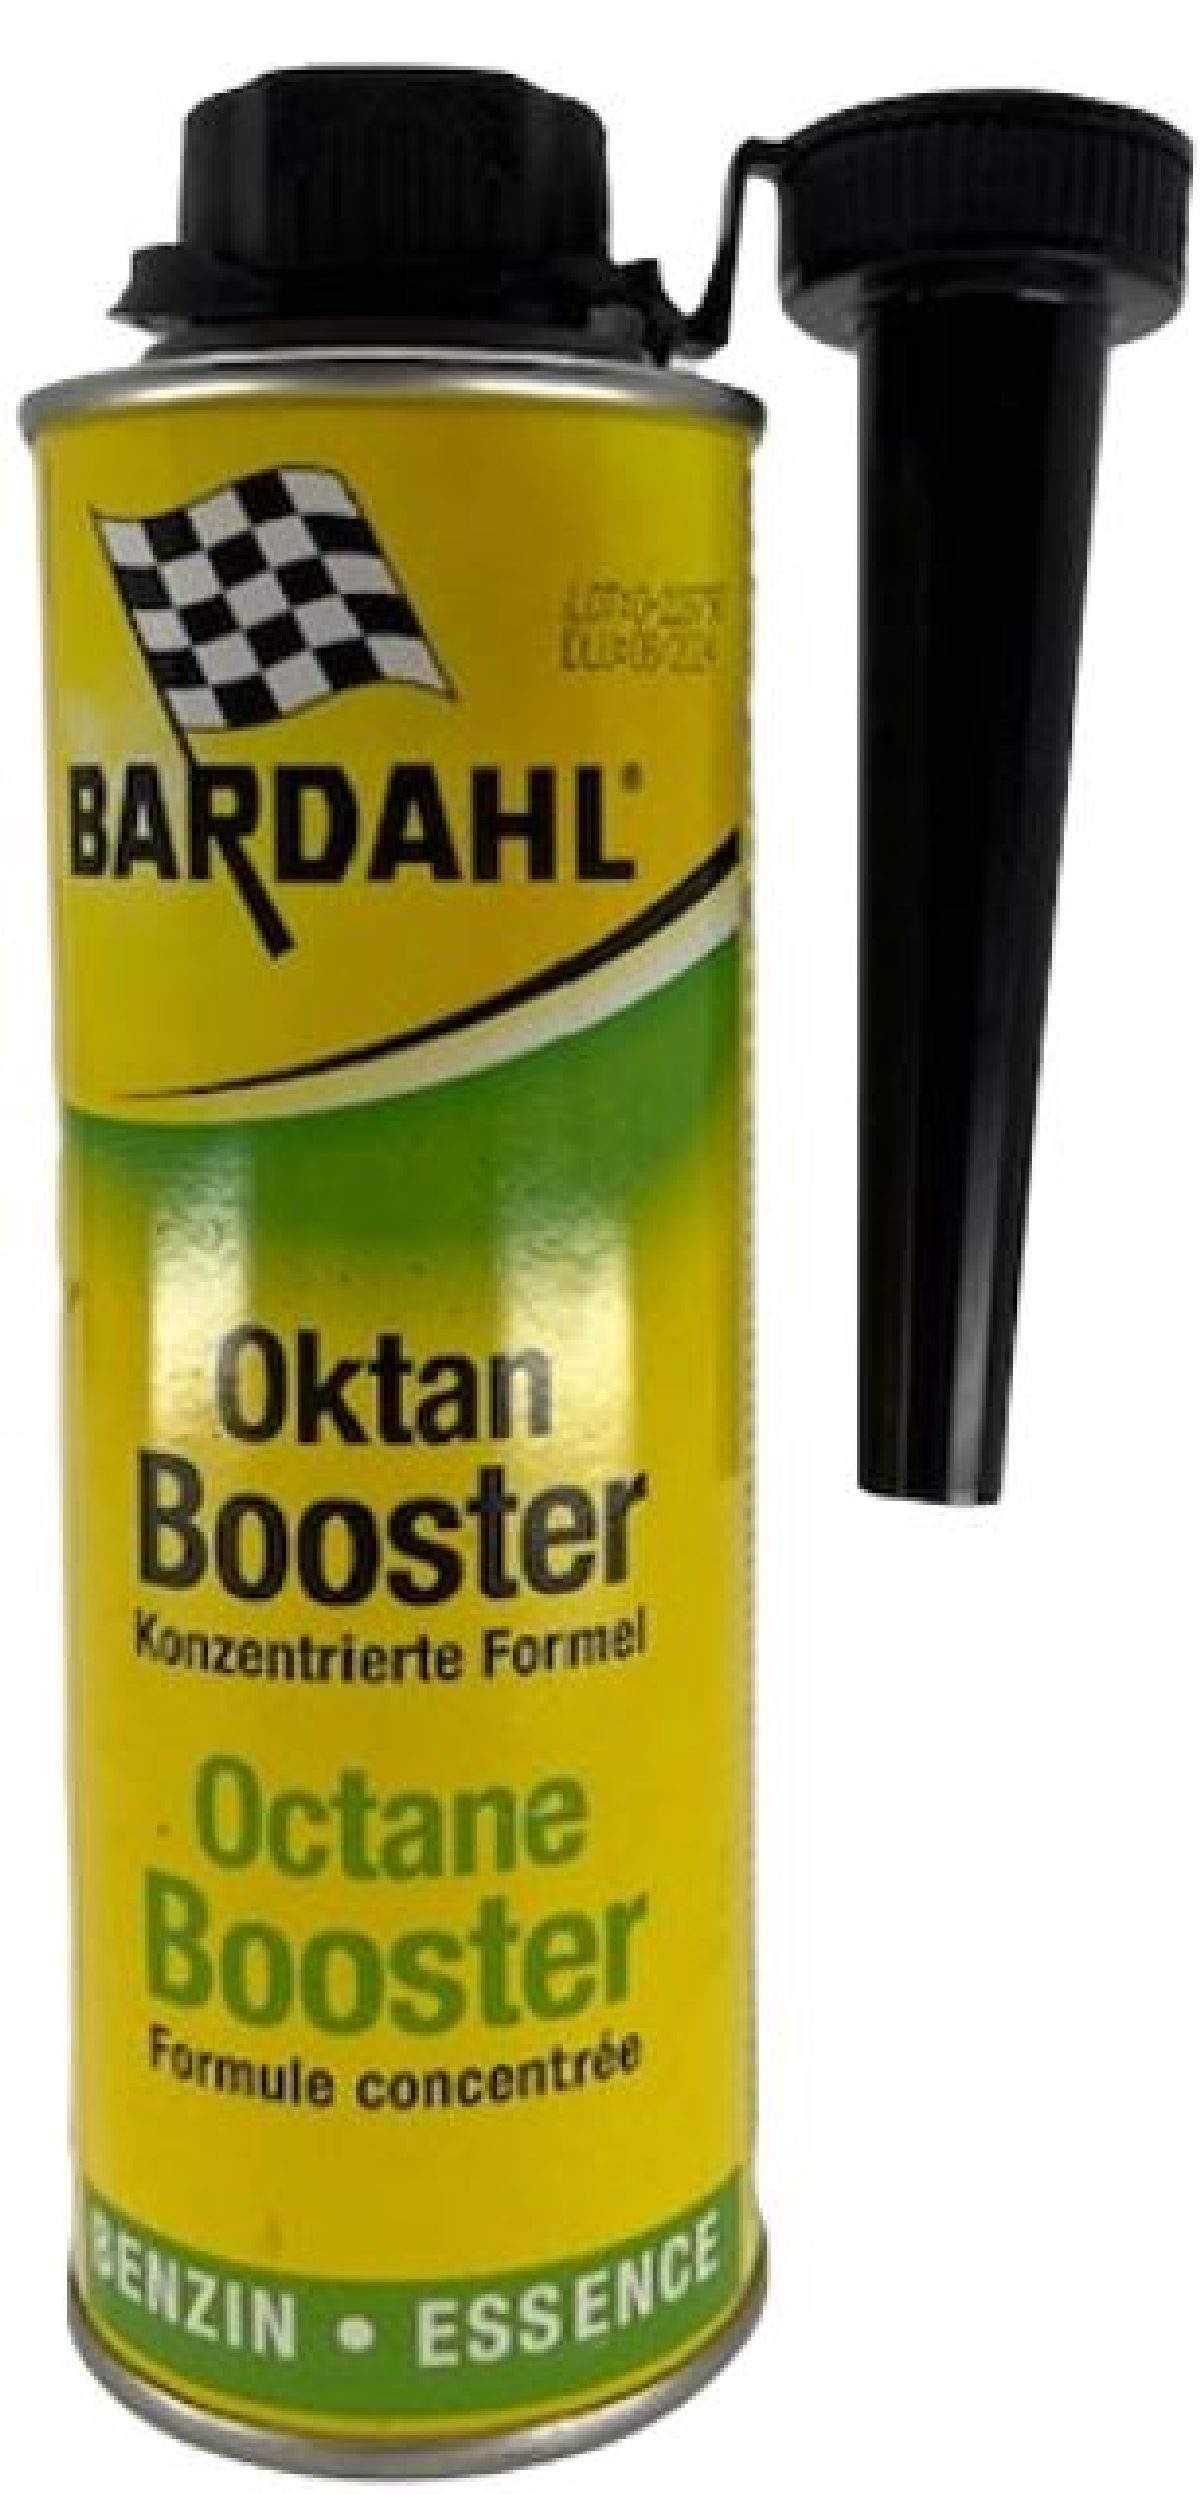 Bardahl Oktan Booster